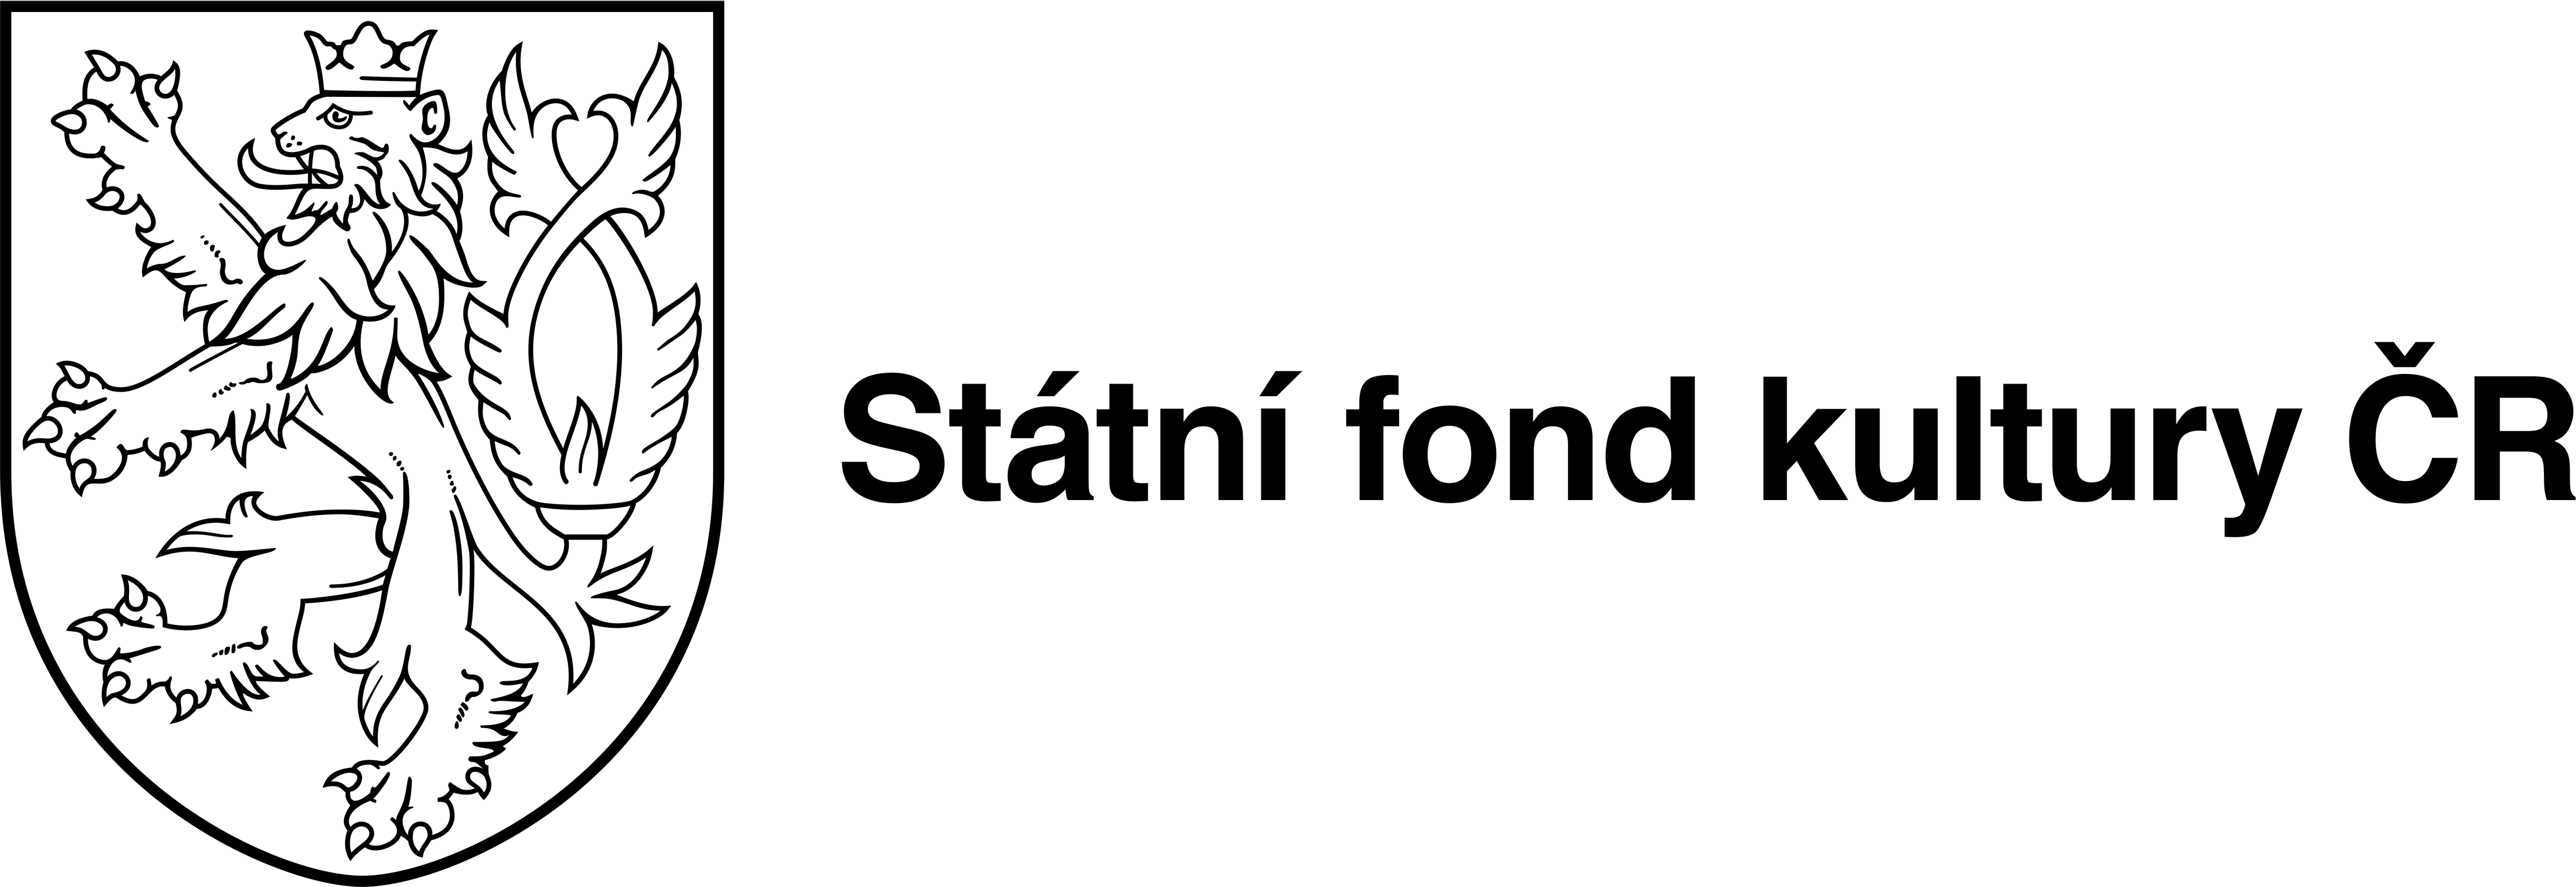 logo-cernobile-cesky.png (277 KB)